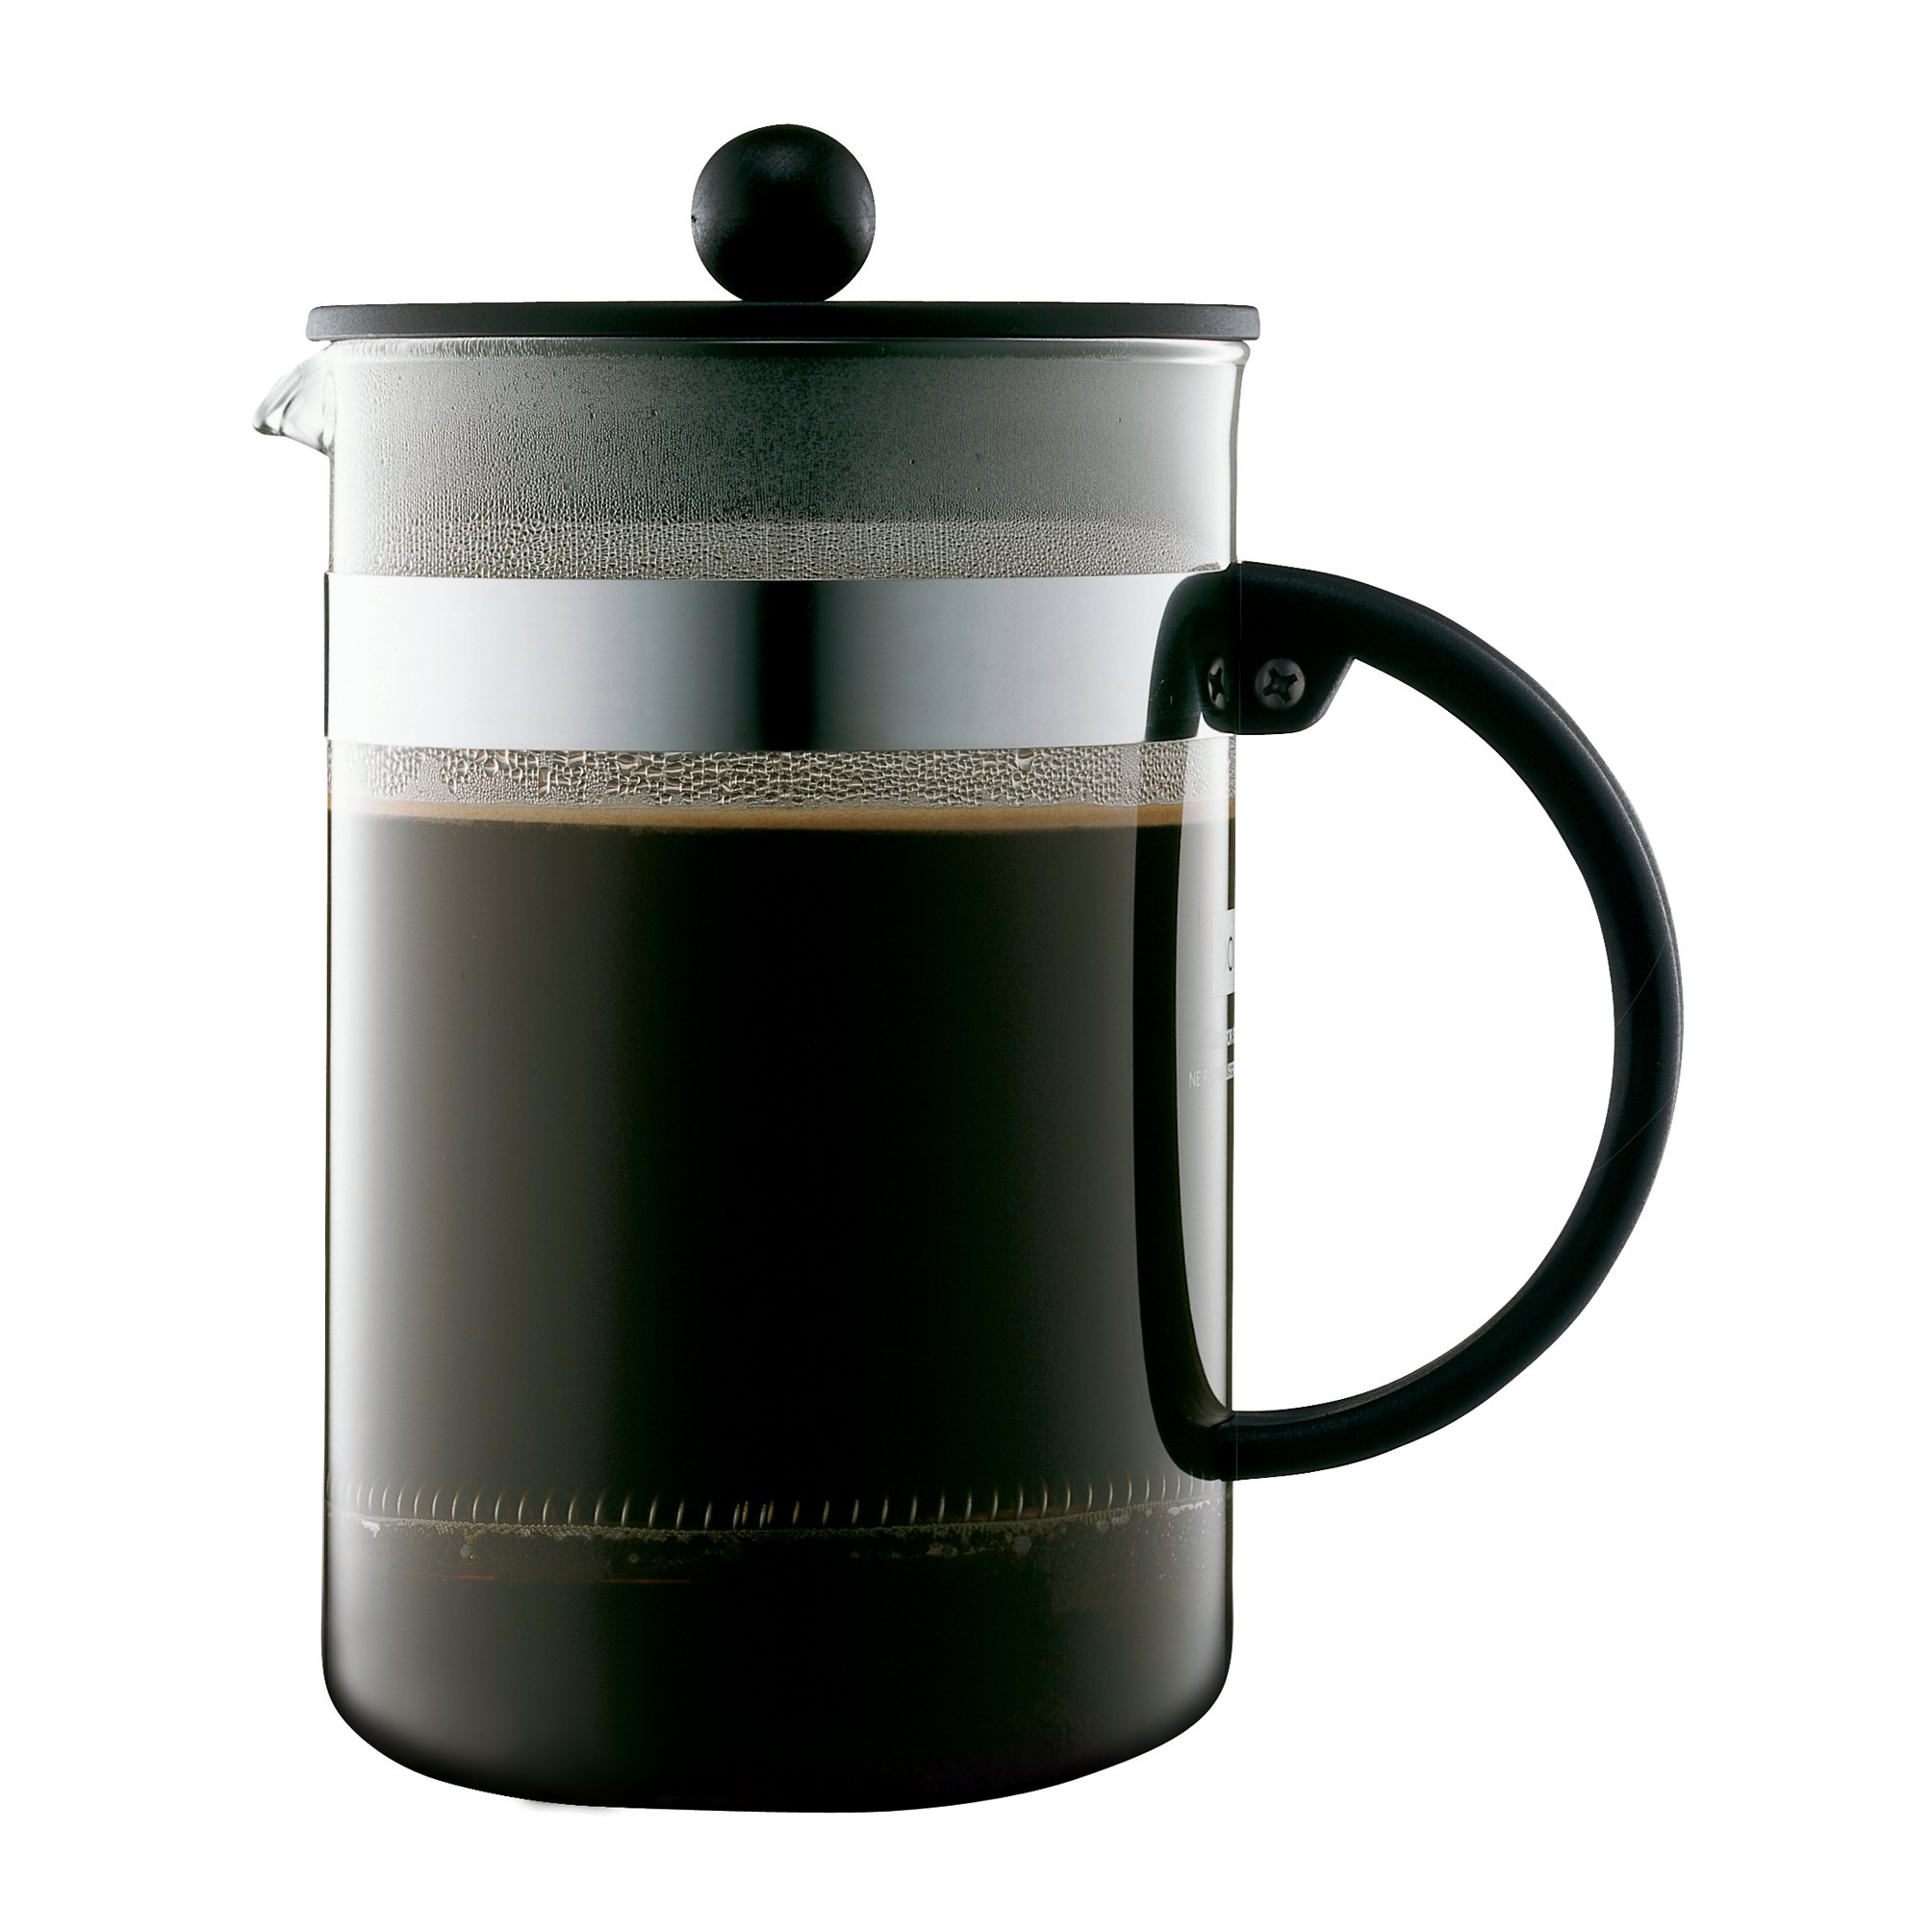 Coffee presses travel mugs at NordicNest.com